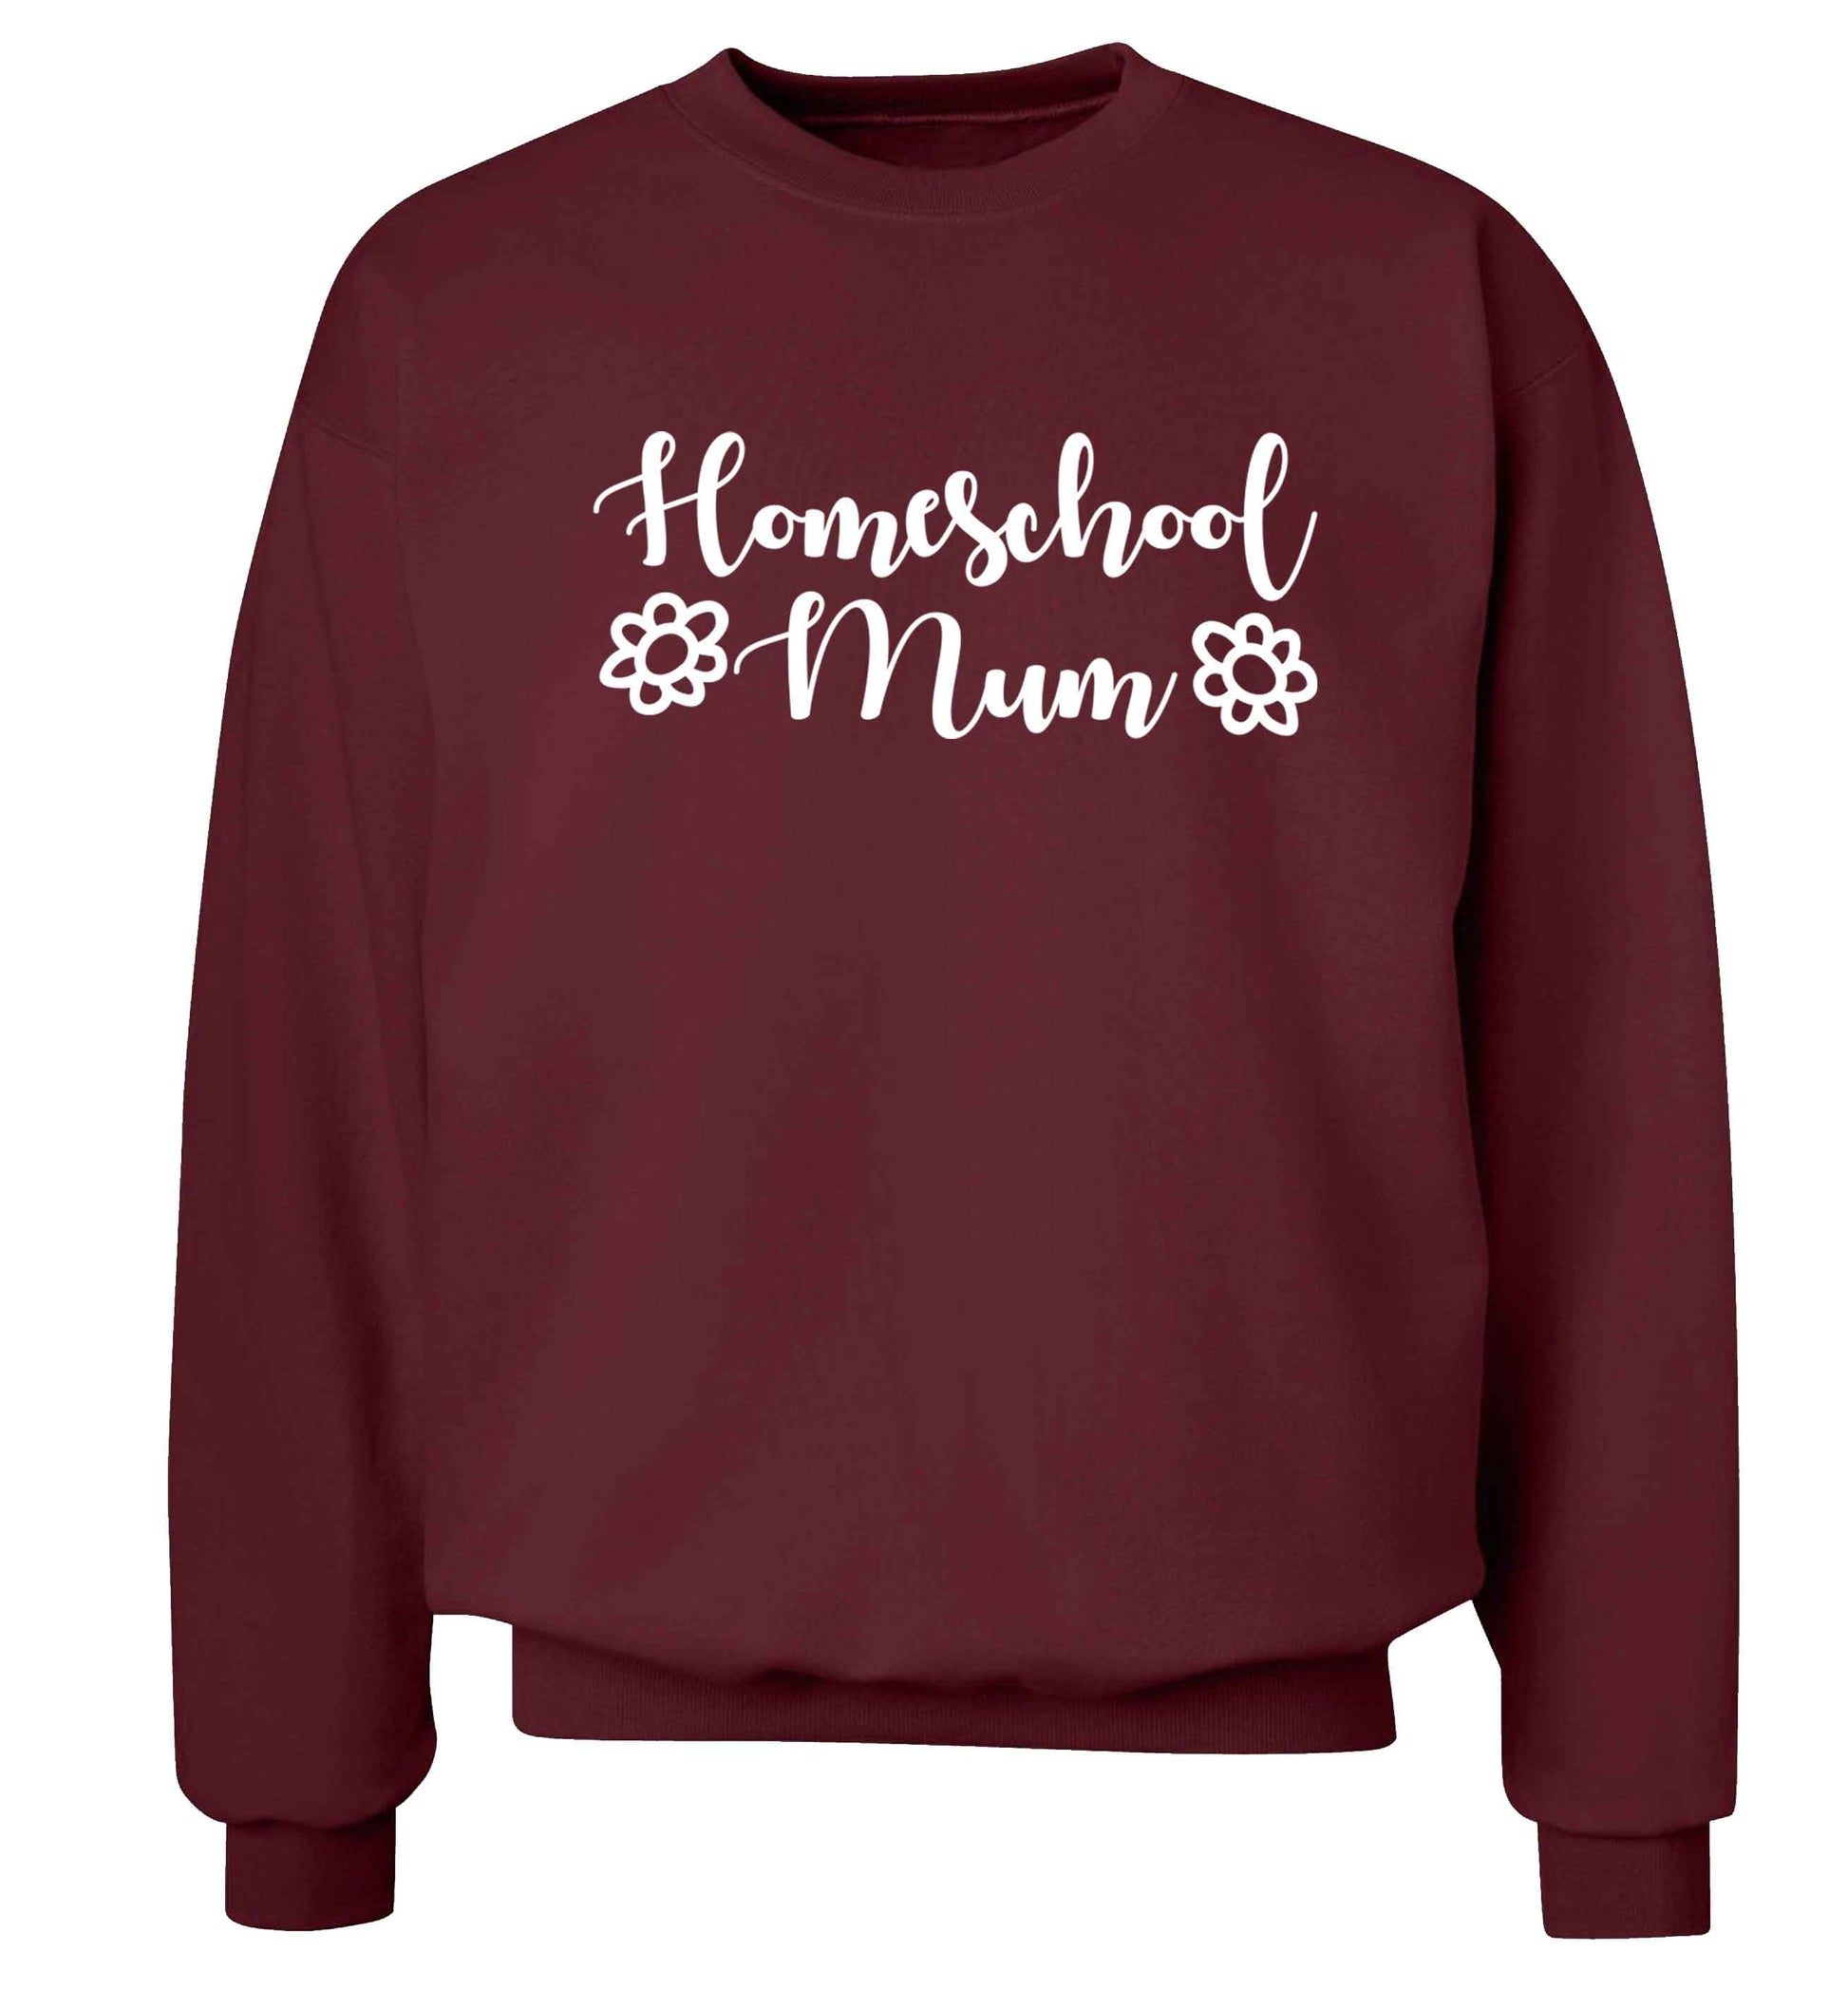 Homeschool mum Adult's unisex maroon Sweater 2XL